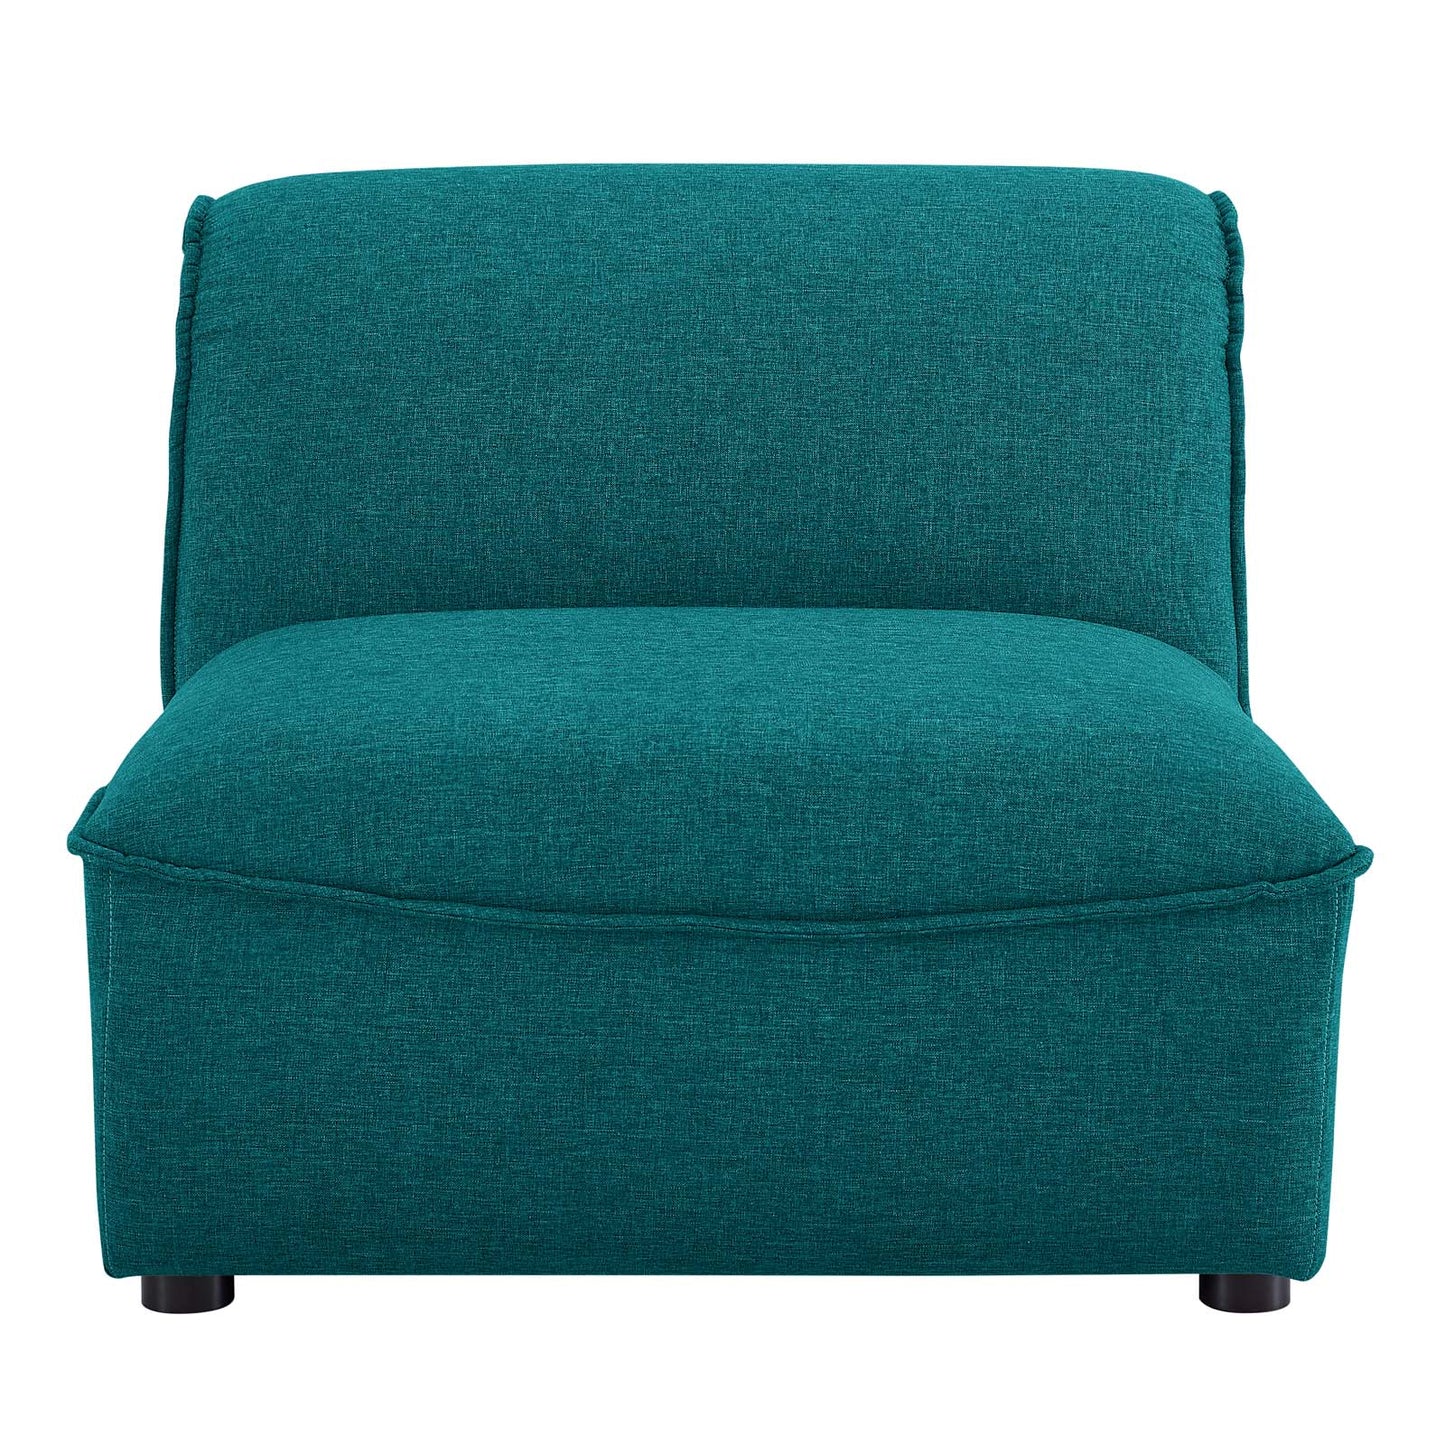 Comprise Armless Chair Teal EEI-4418-TEA